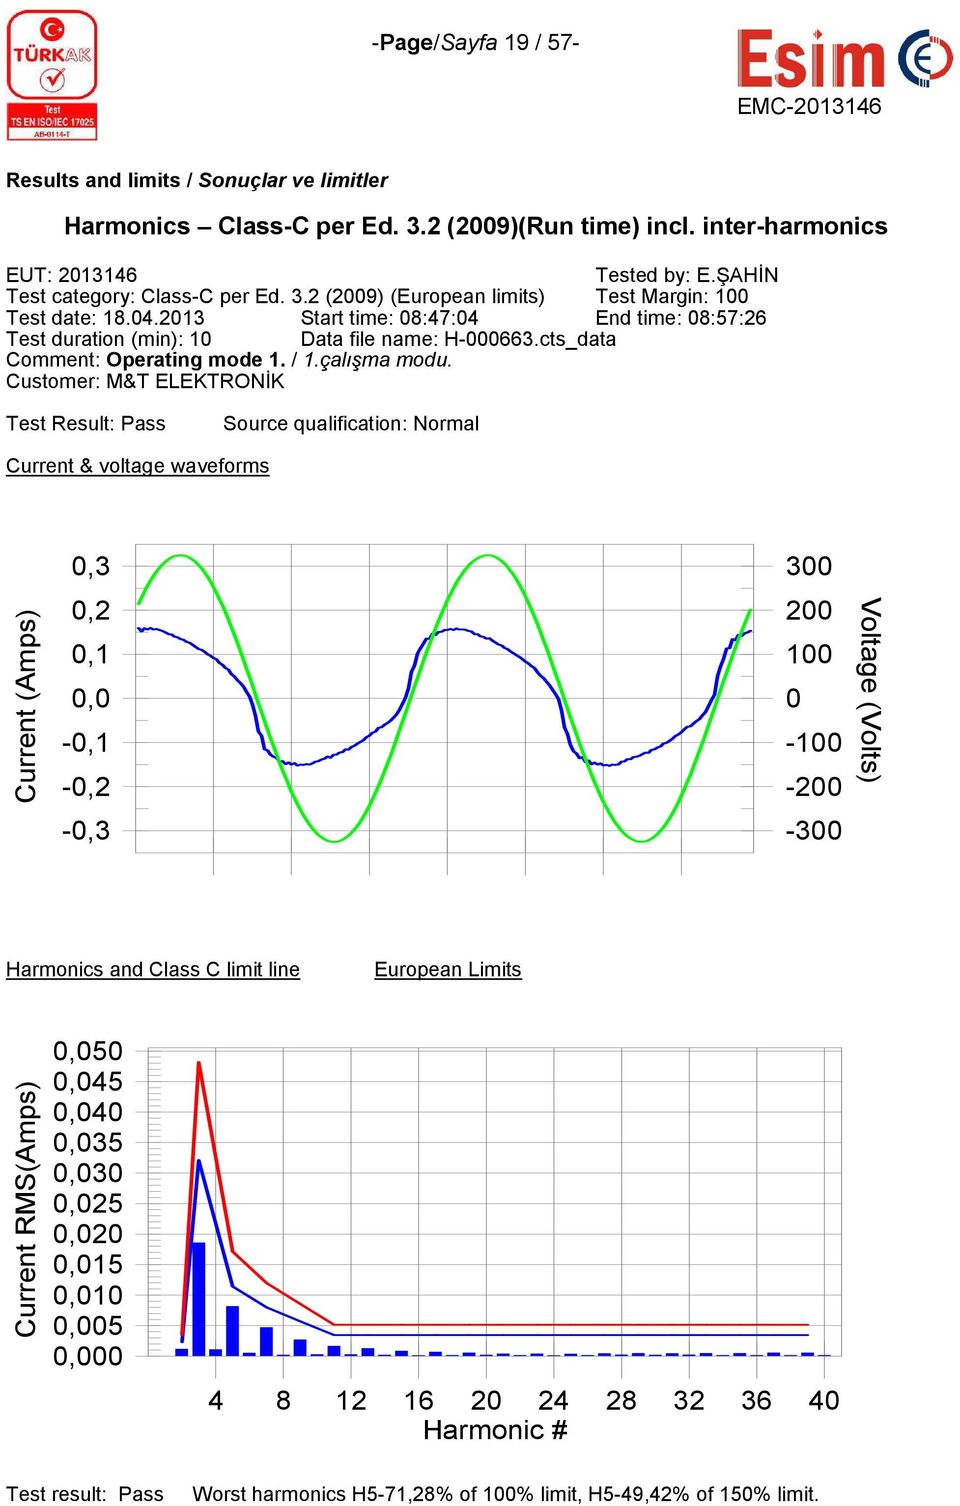 Customer: M&T ELEKTRONİK Test Result: Pass Source qualification: Normal Current & voltage waveforms 0,3 300 Current (Amps) 0,2 0,1 0,0-0,1-0,2 200 100 0-100 -200 Voltage (Volts) -0,3-300 Harmonics